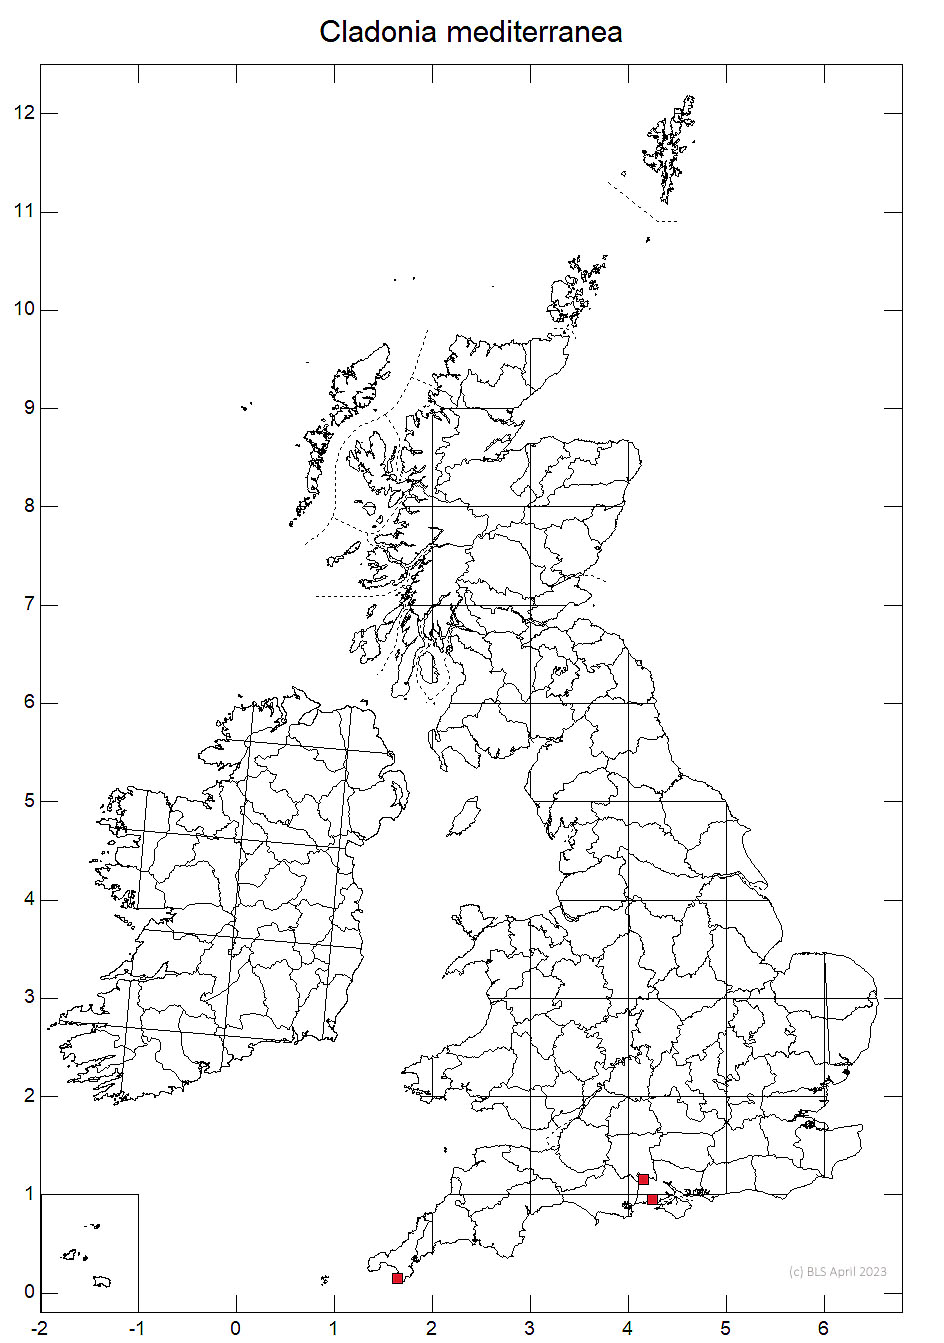 Cladonia mediterranea 10km sq distribution map